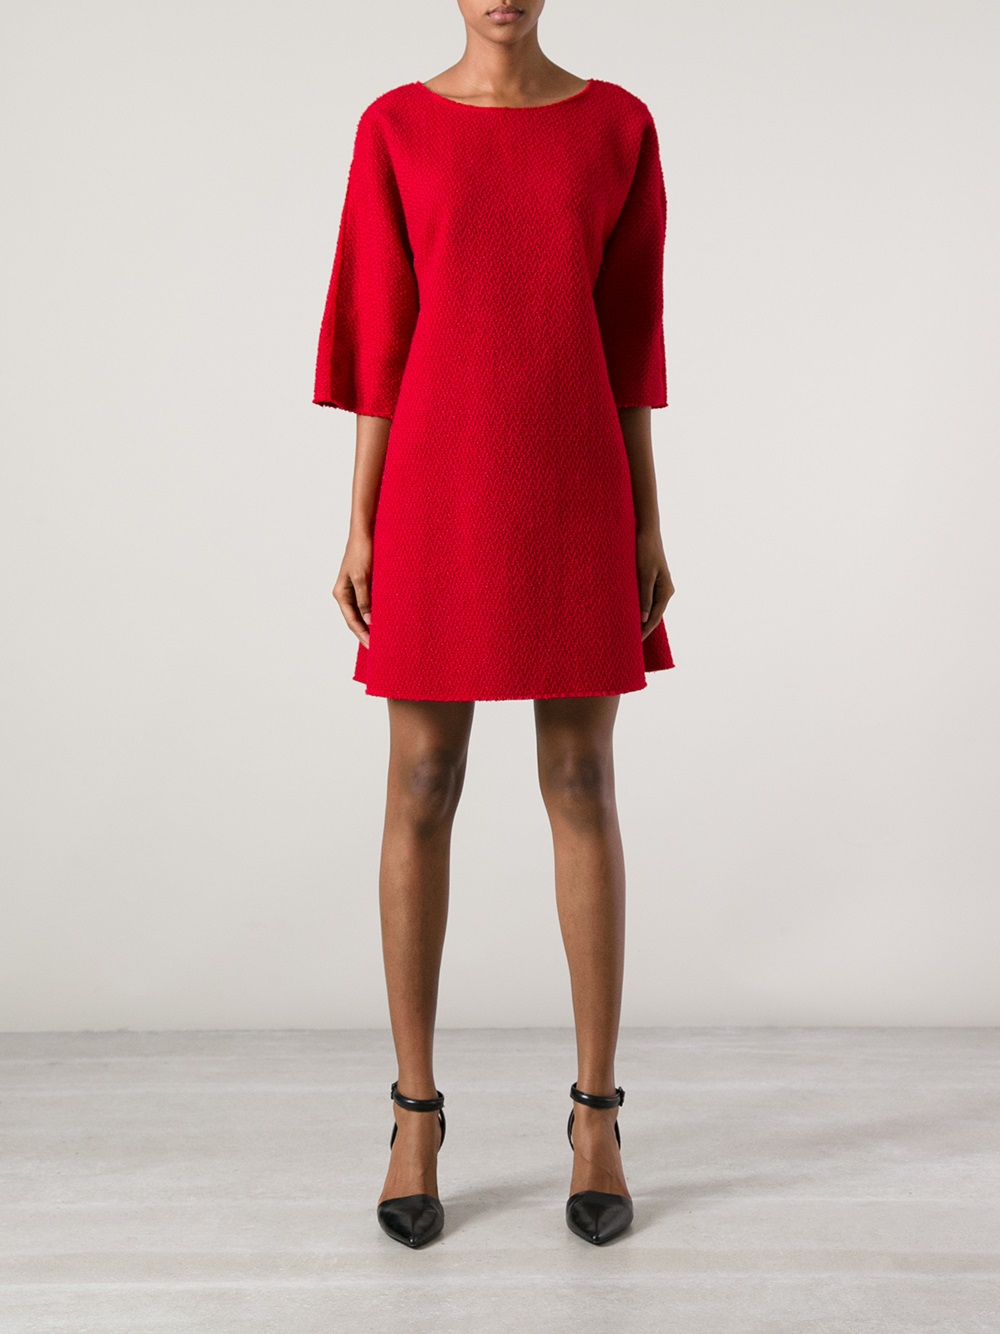 Dolce & gabbana Dolce Gabbana Boat Neck Dress in Red | Lyst